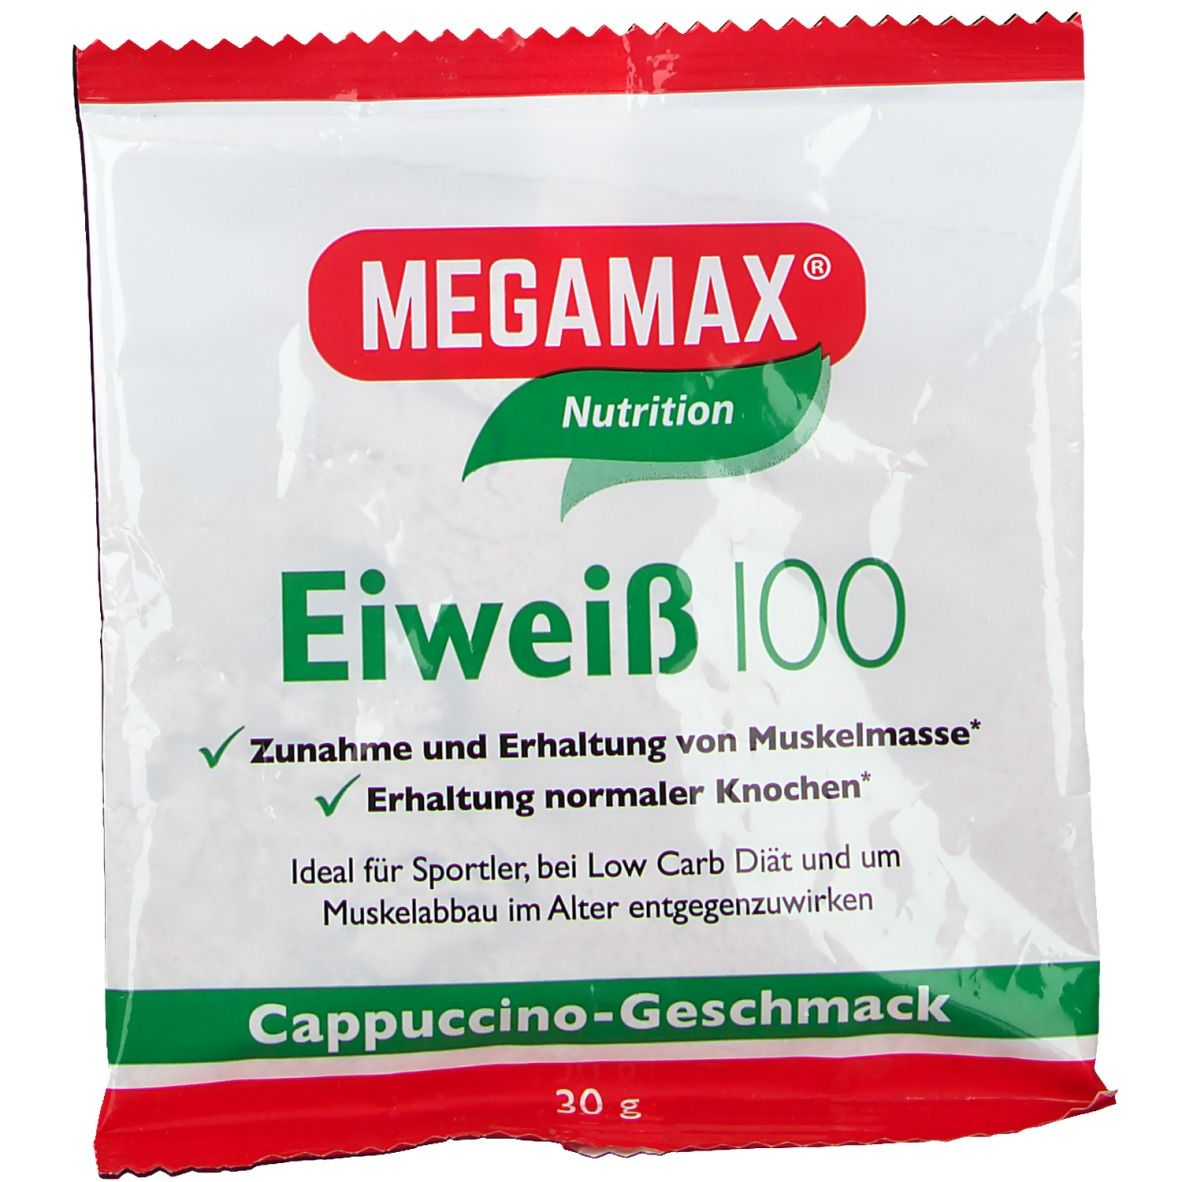 MEGAMAX® Basic & Active Eiweiß 100 Cappuccino-Geschmack